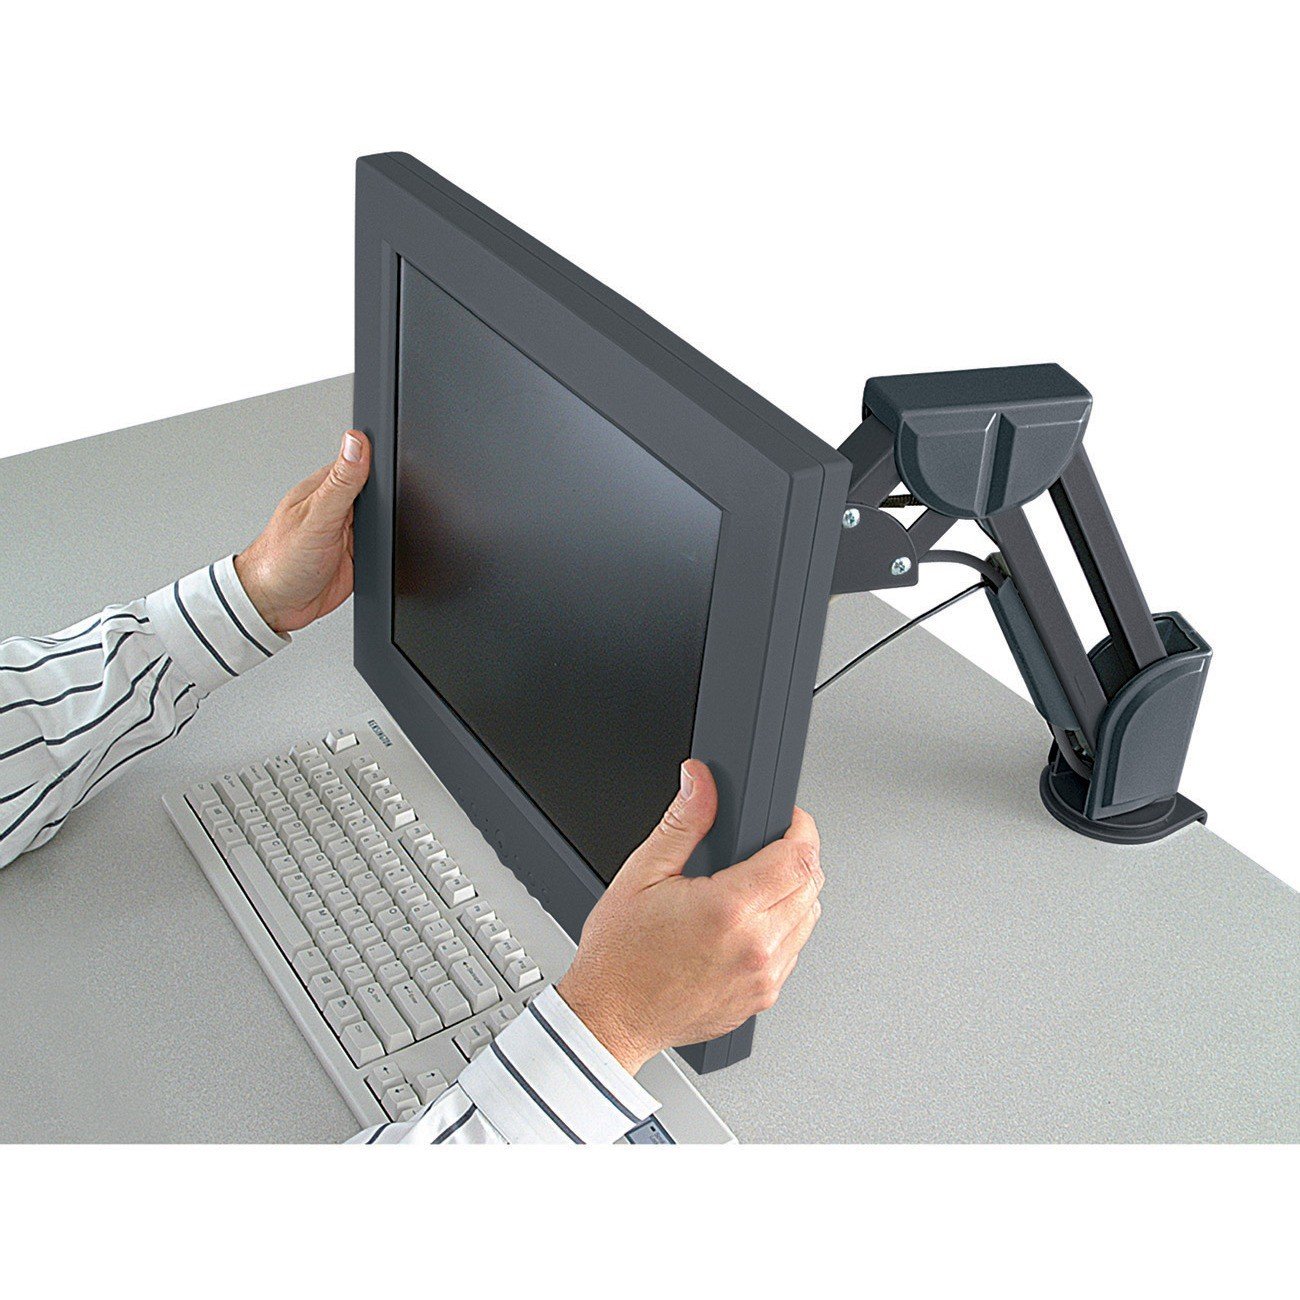 Kensington Desk-Mount LCD Monitor Arm